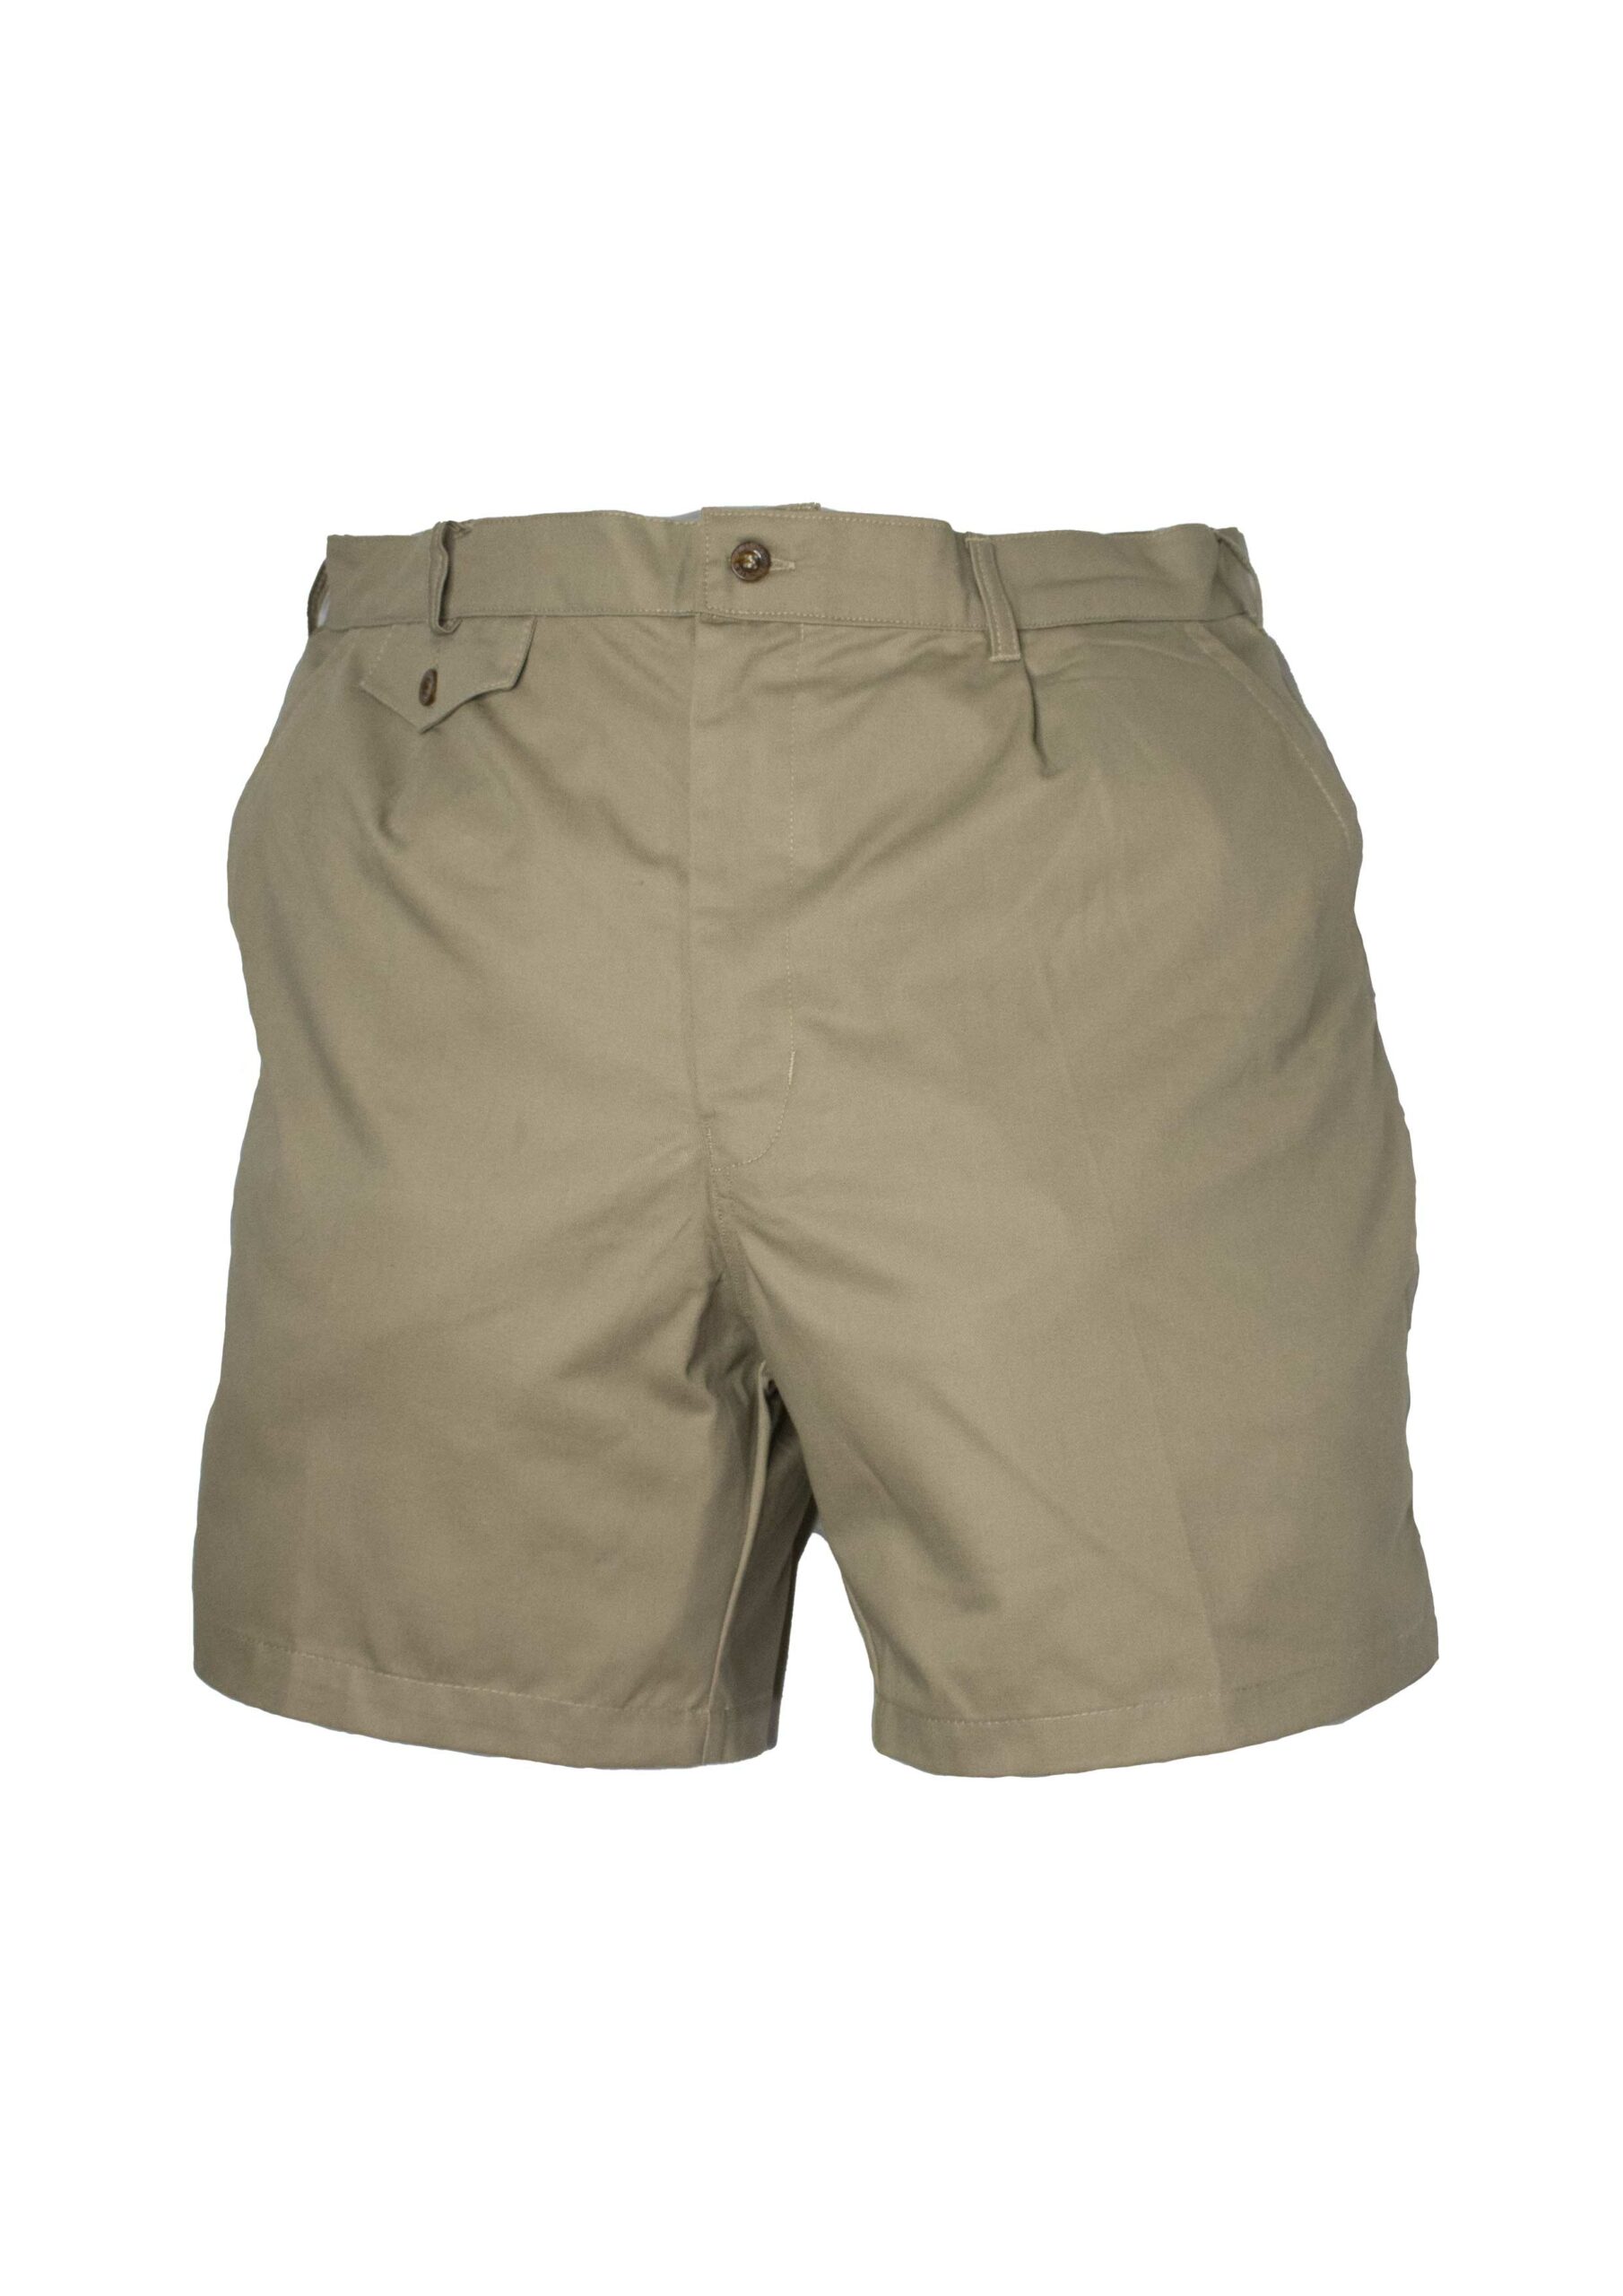 Nyala Zip Shorts - No Cargo - Big John Online Clothing Company